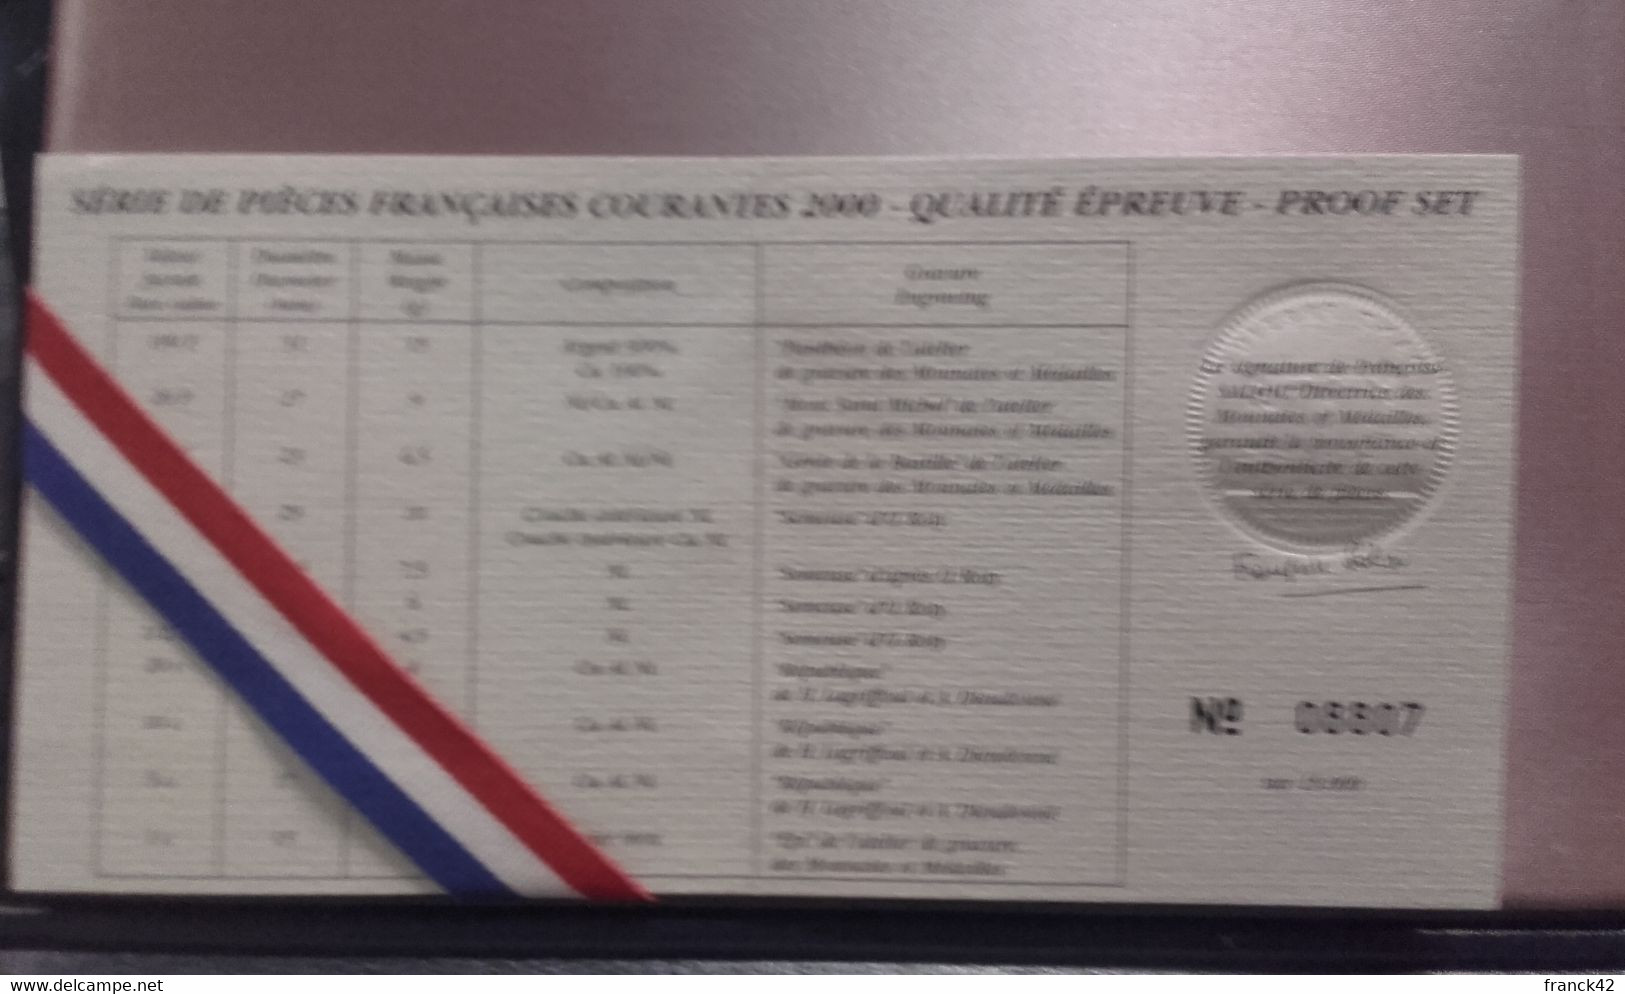 France. Coffret BE 2000 - BU, Proofs & Presentation Cases